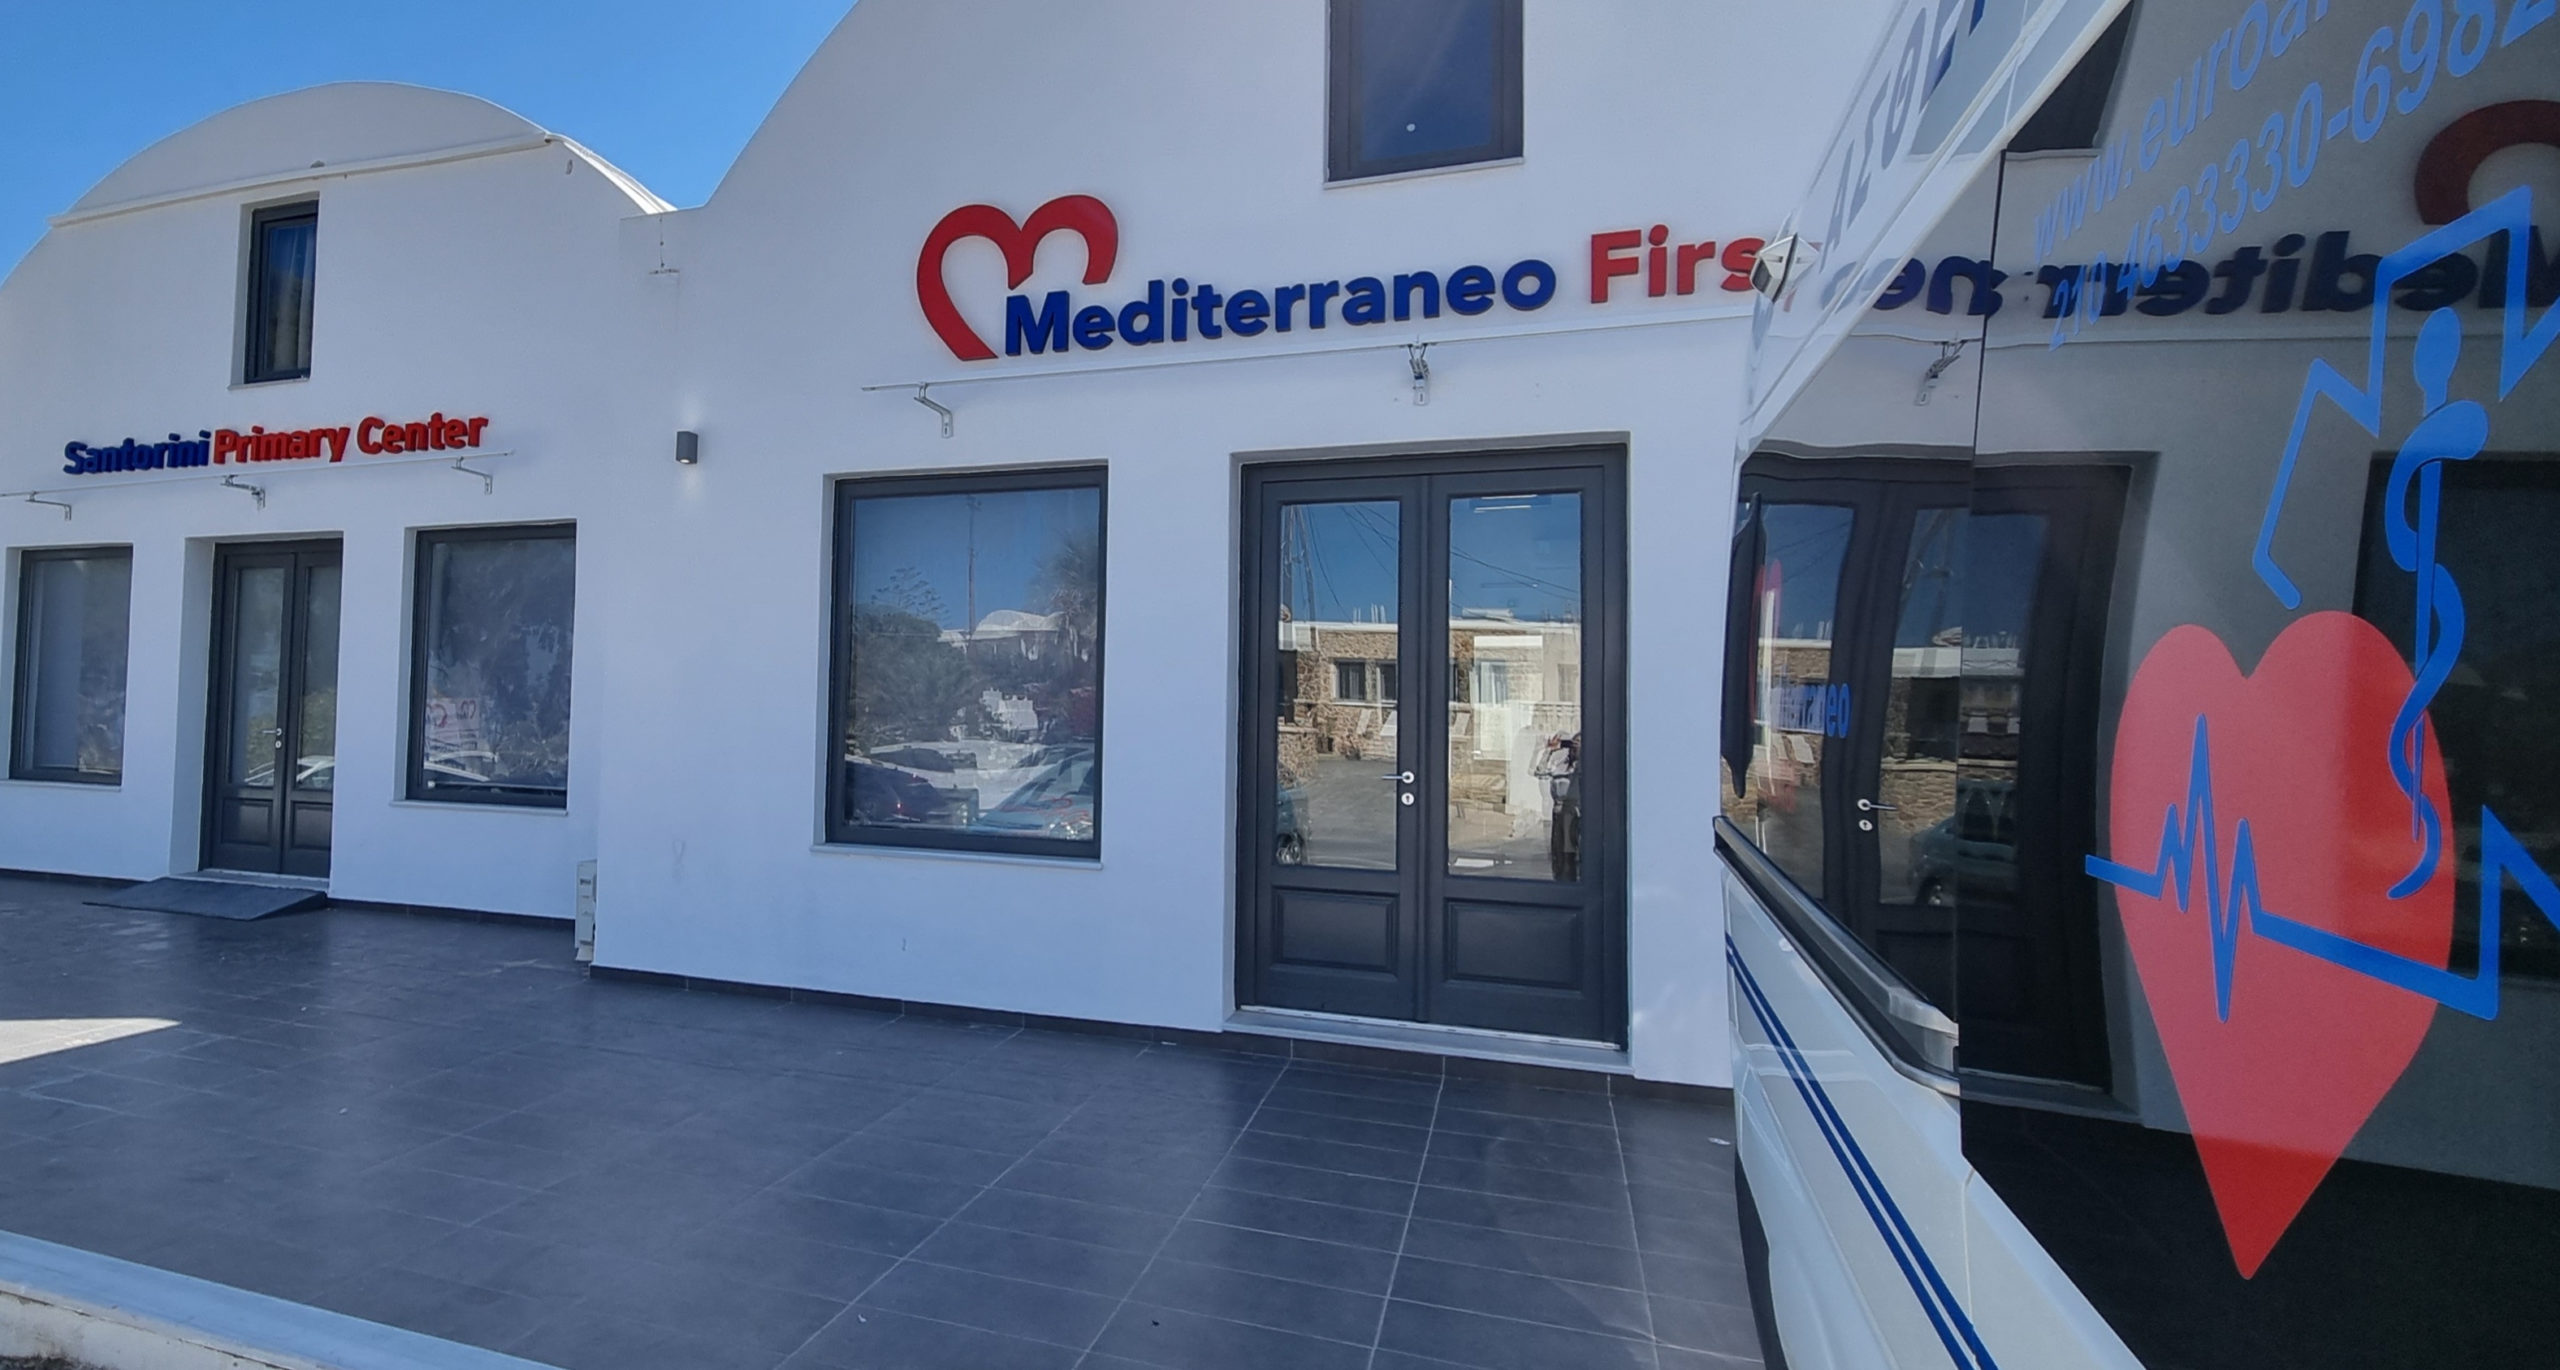 Mediterraneo First Care Santorini scaled - Τέλεση εγκαινίων του Mediterraneo First Care Santorini!